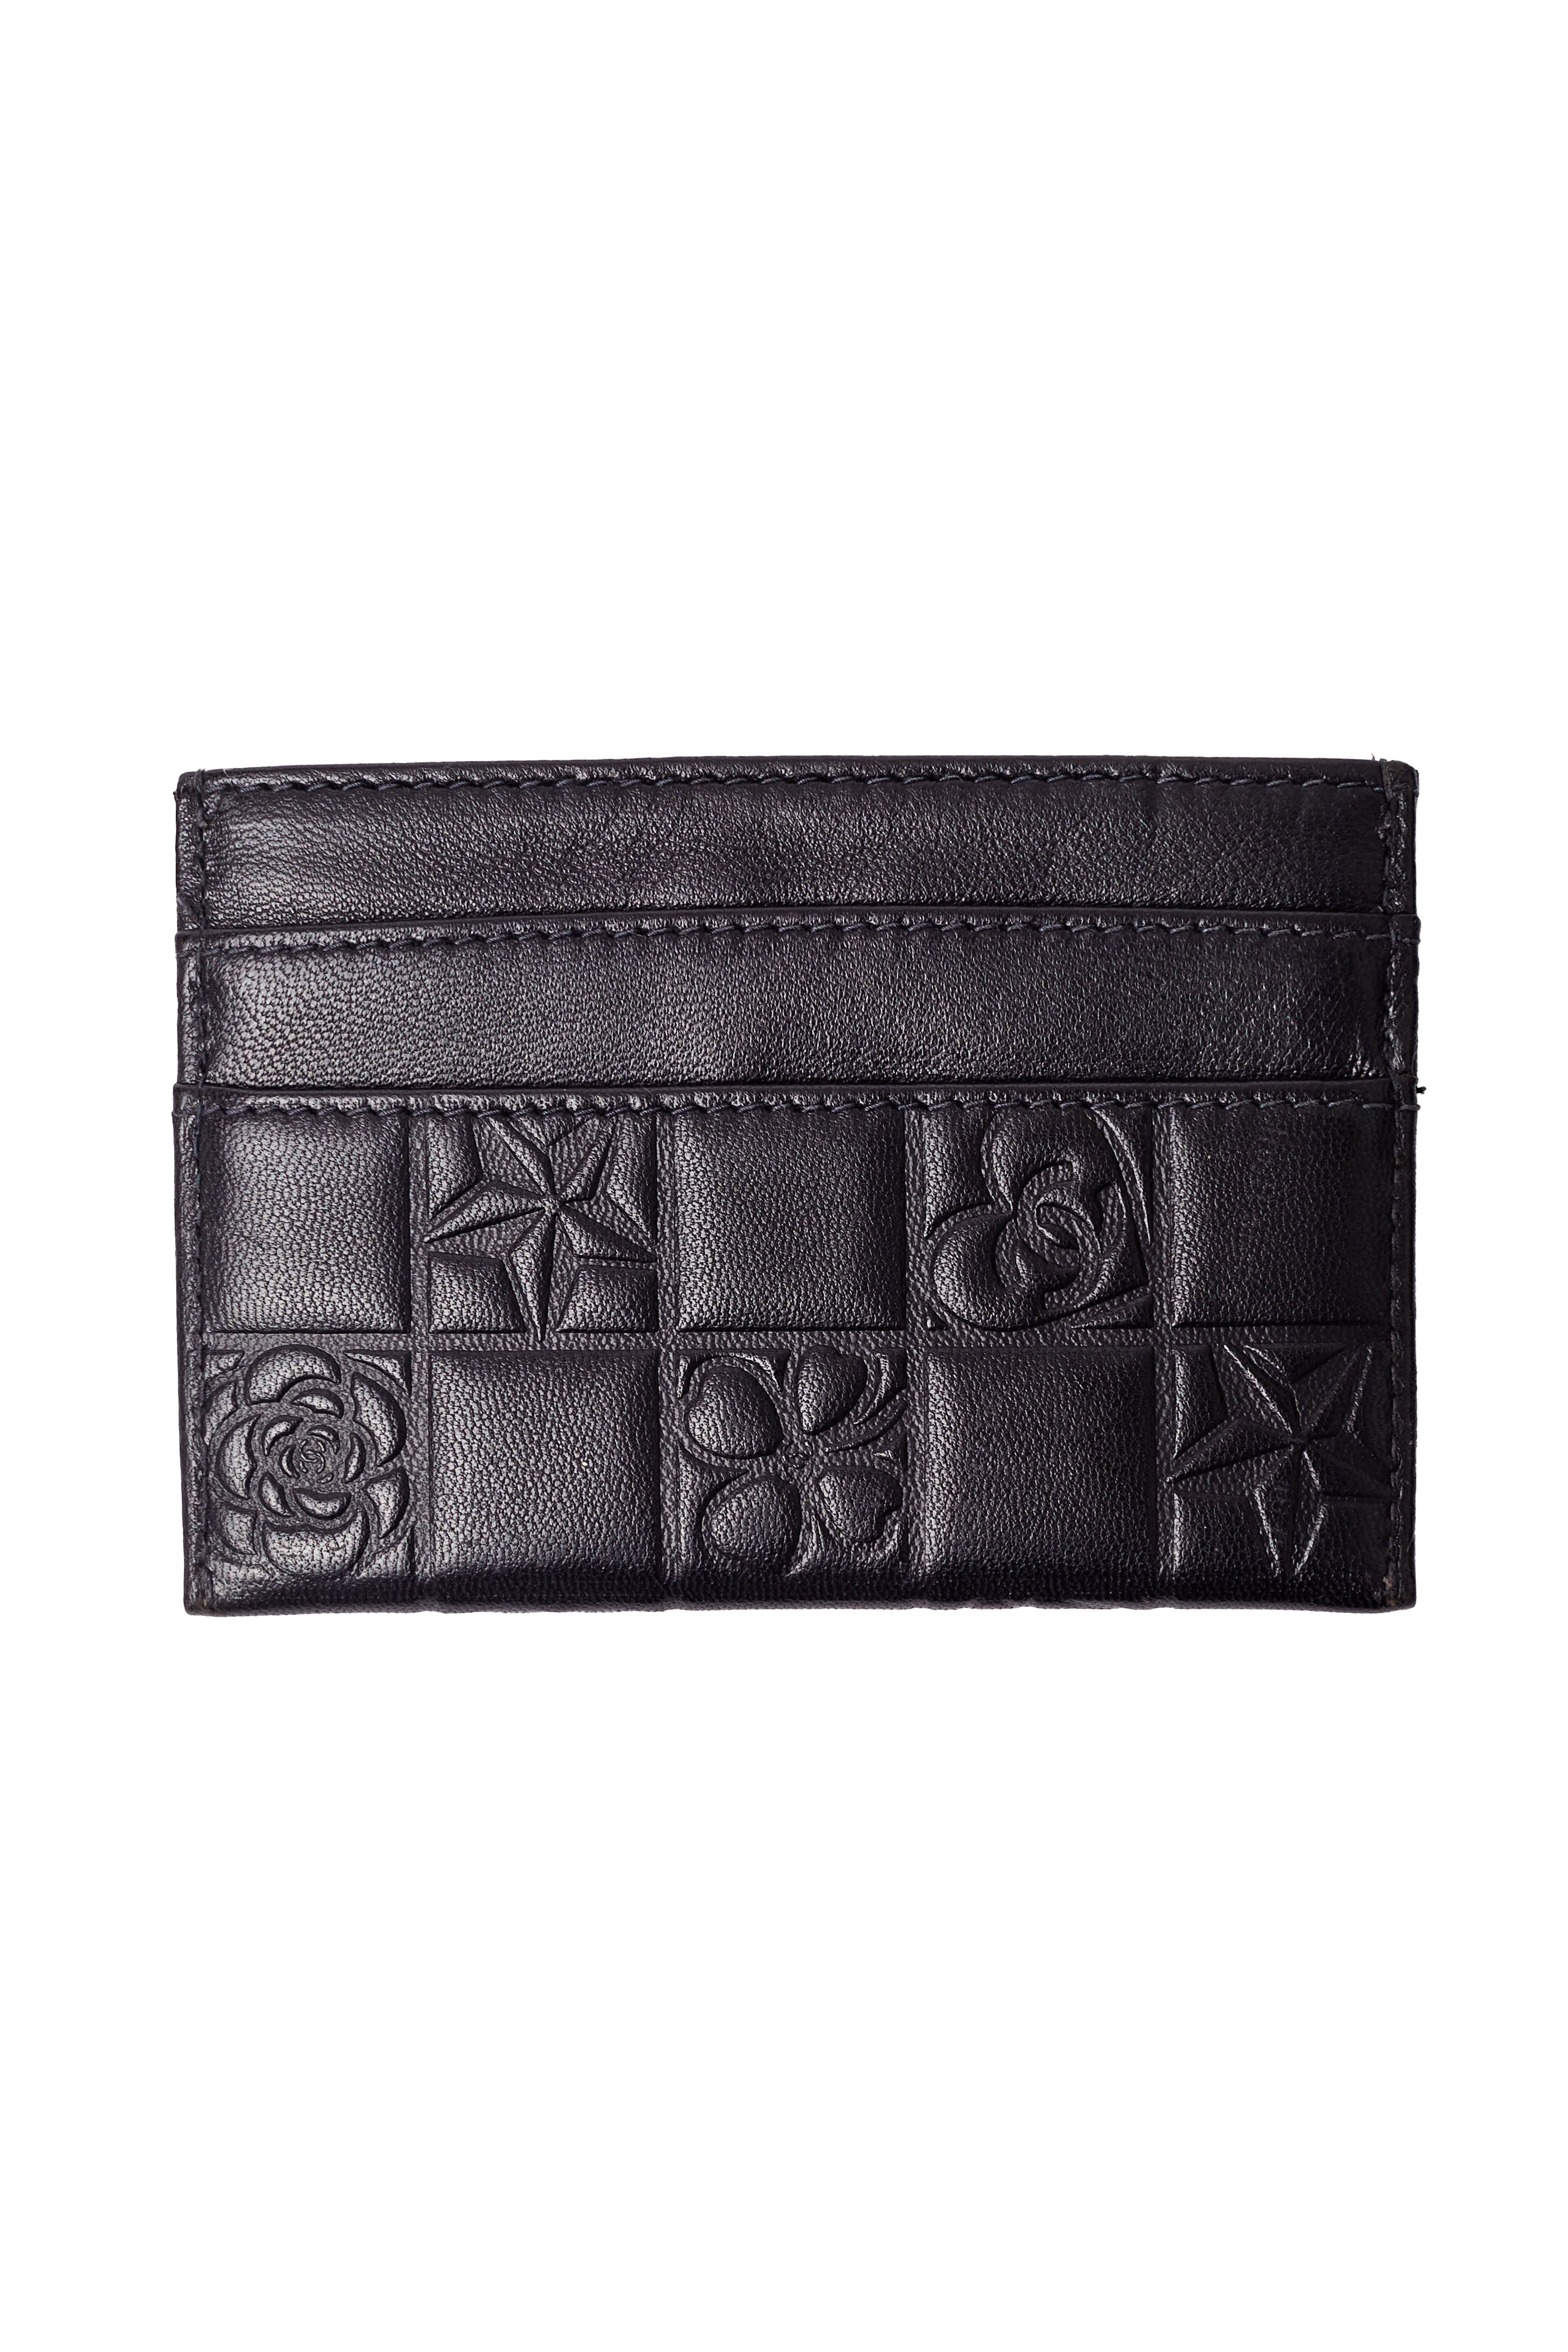 Chanel <br> c2004 CC logo icons lambskin leather cardholder